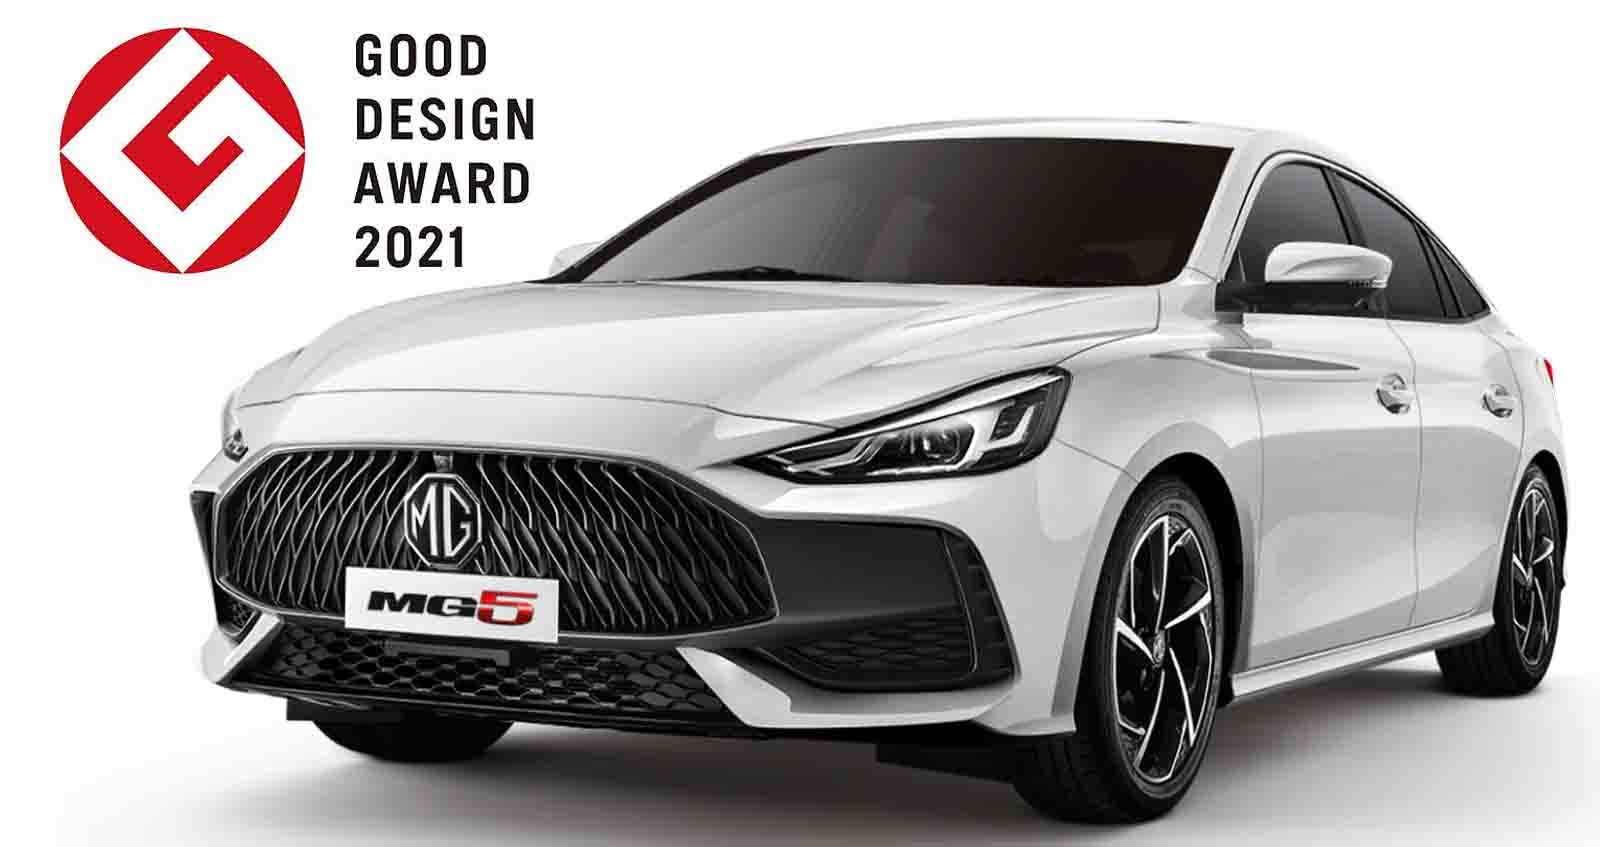 ALL NEW MG5 คว้ารางวัลการออกแบบระดับโลก “Good Design Award 2021”จากประเทศญี่ปุ่น